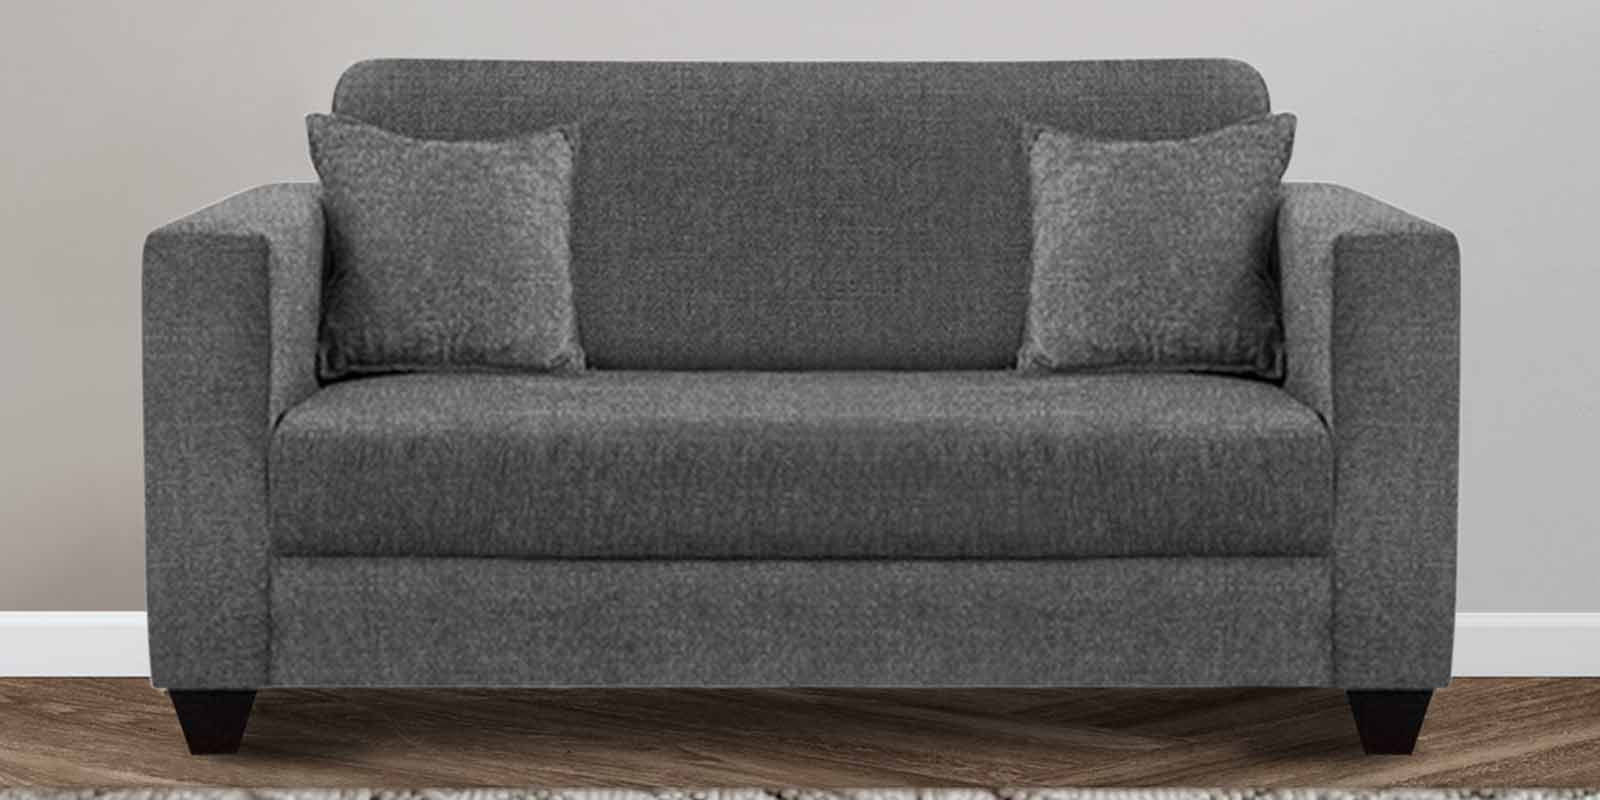 Nebula Fabric 2 Seater Sofa in Charcoal Grey Colour